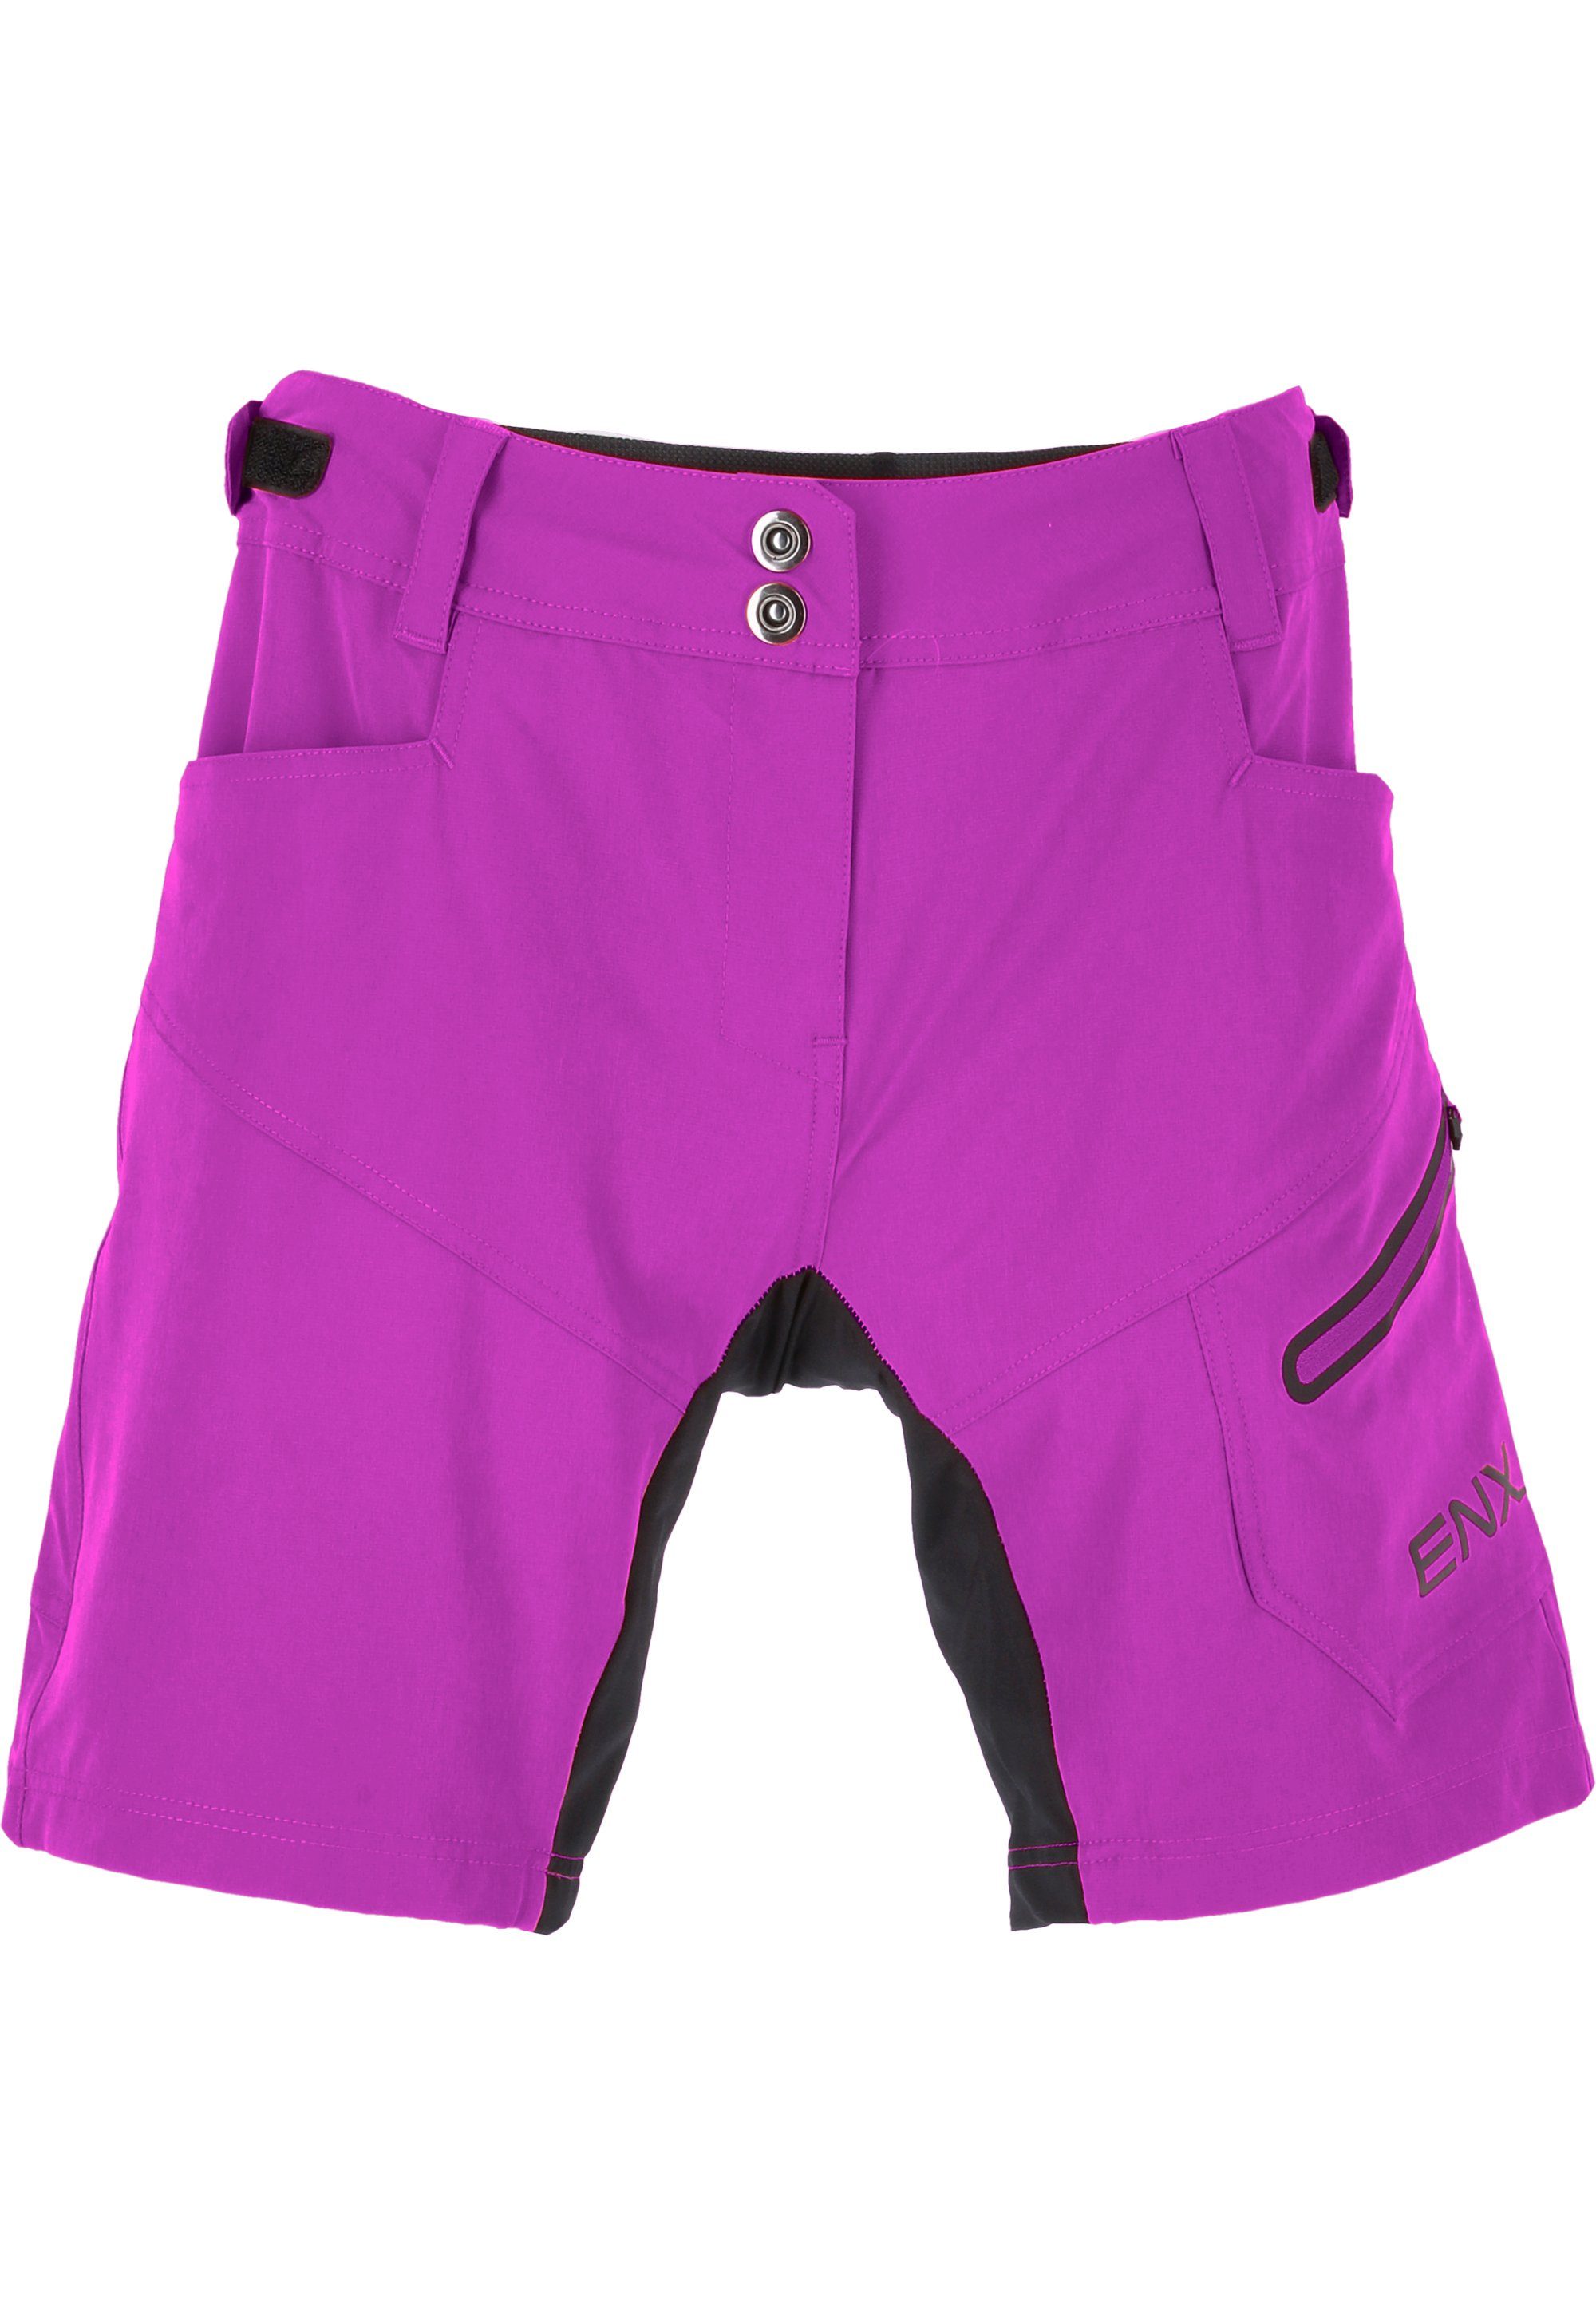 ENDURANCE Radhose Jamilla W 2 lila 1 mit in Innen-Tights herausnehmbarer Shorts